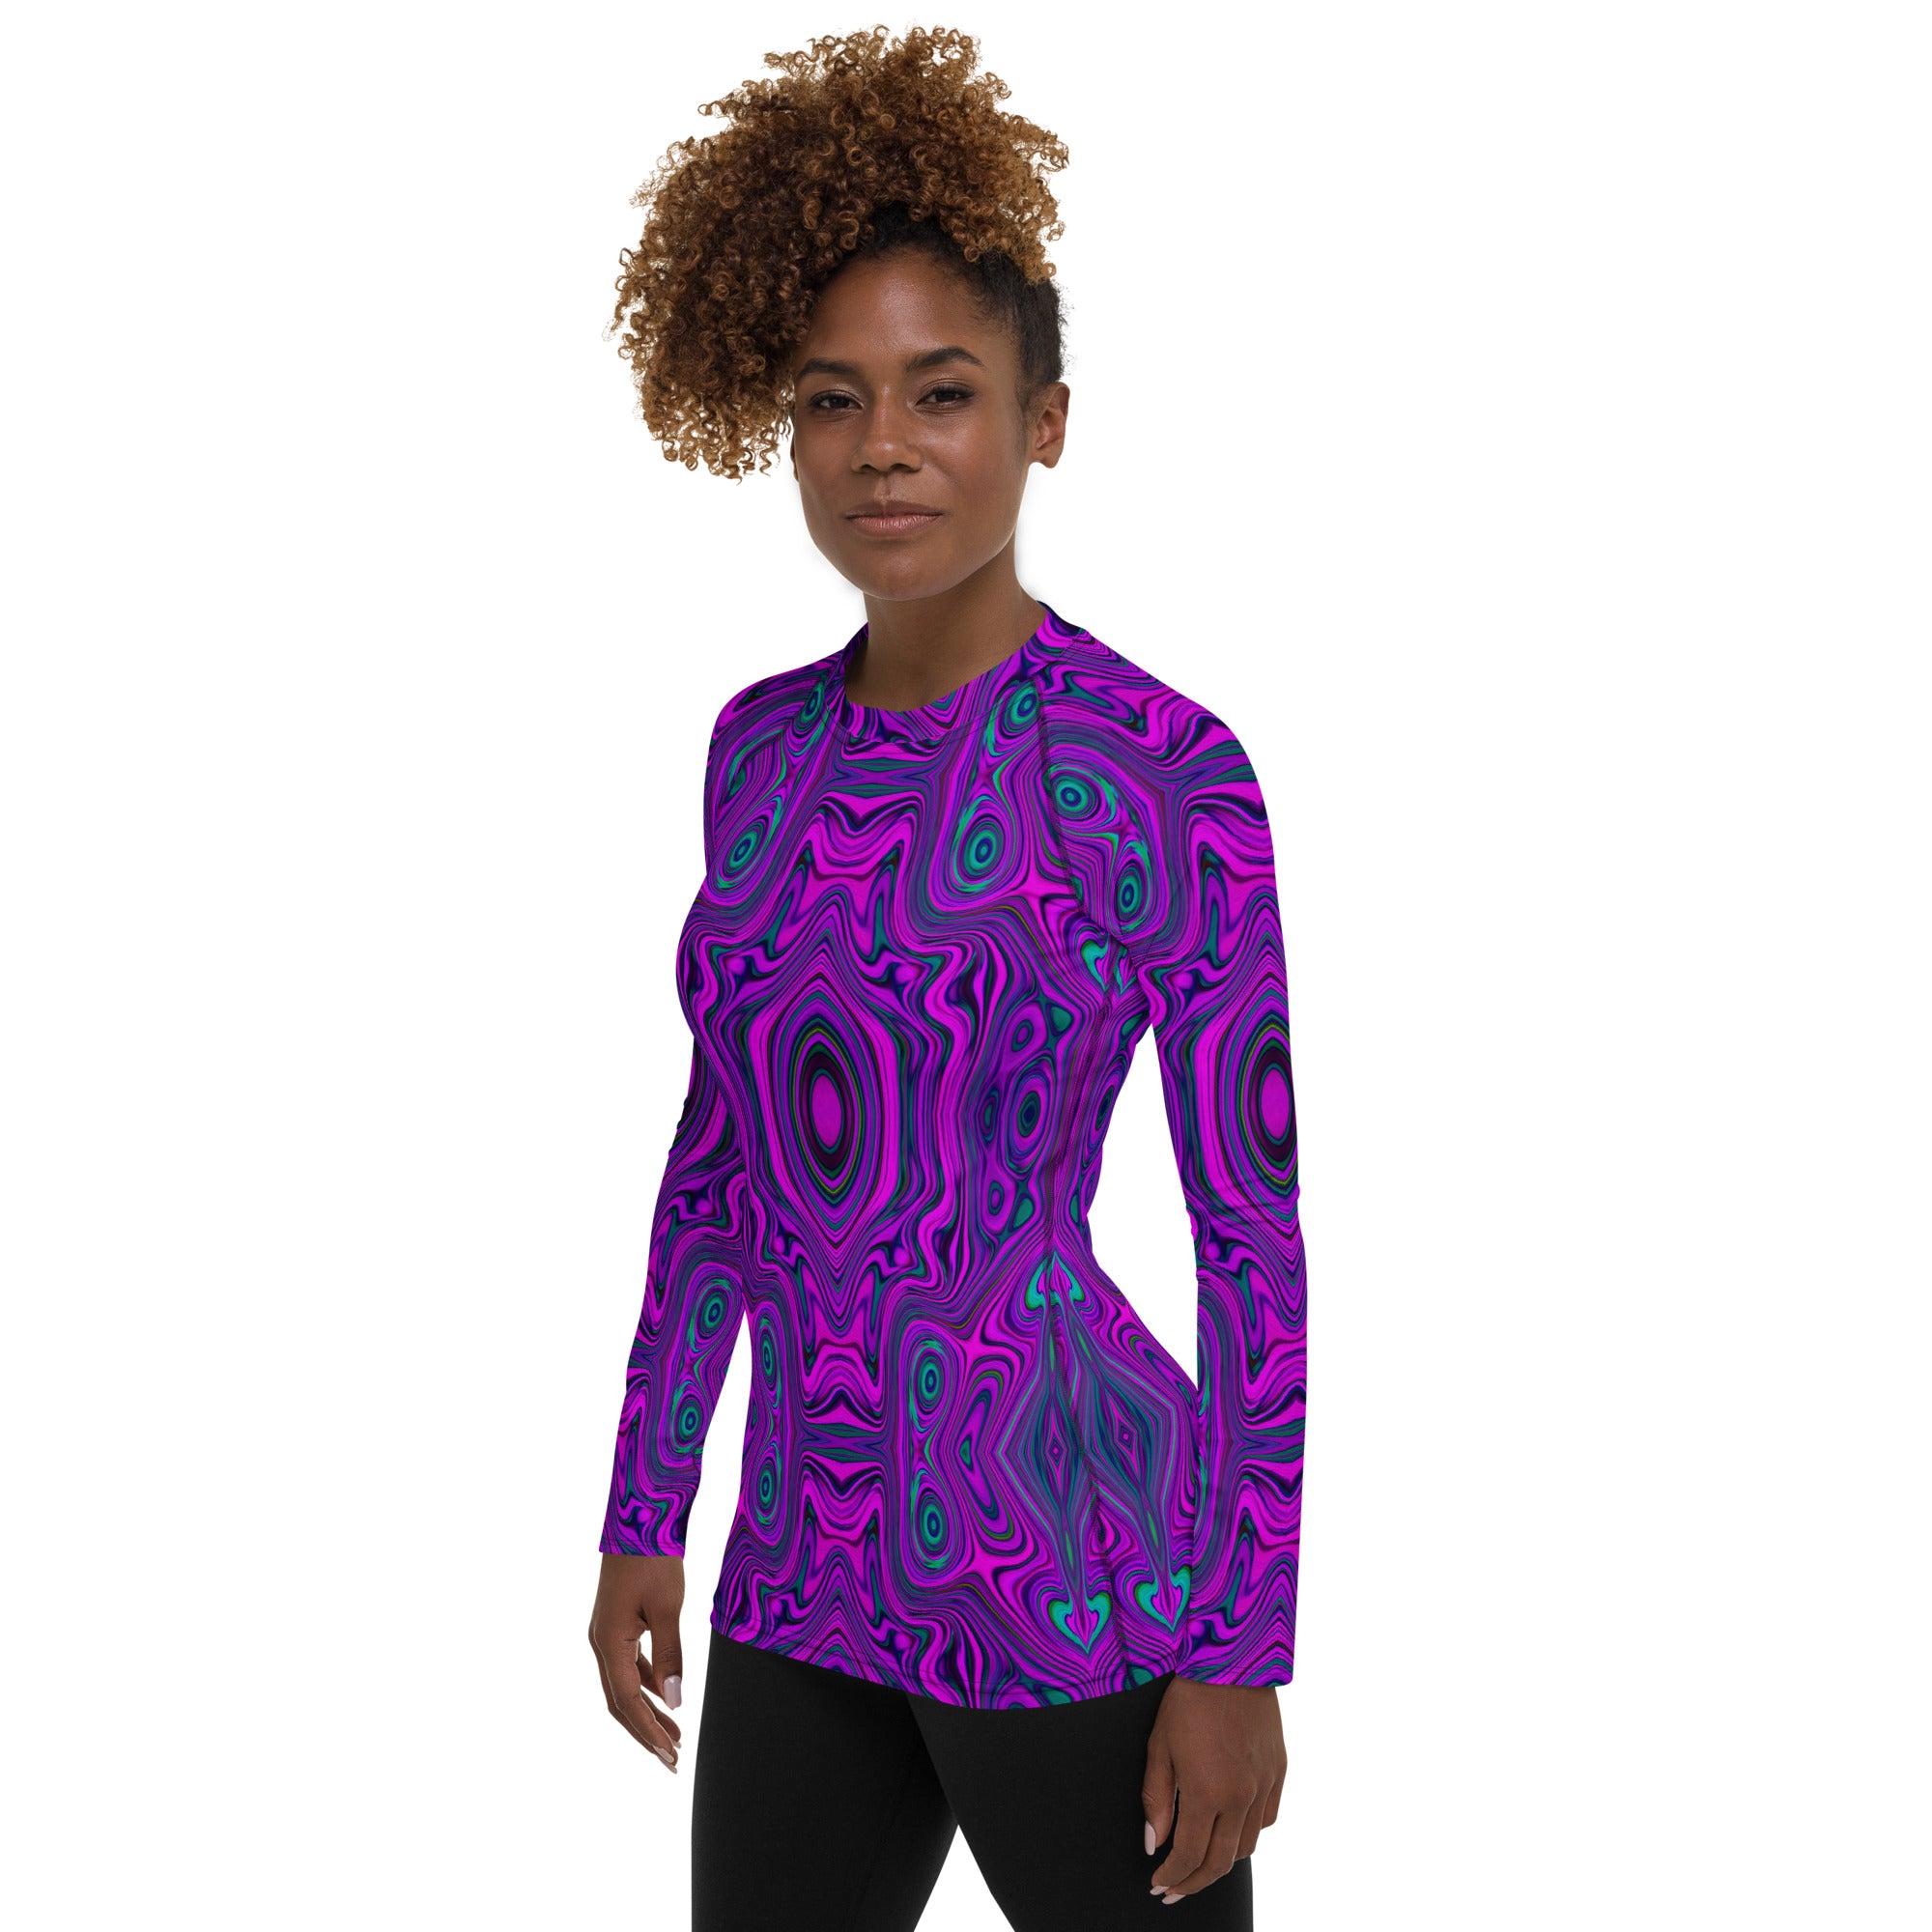 Women's Rash Guard Shirts, Trippy Retro Magenta and Black Abstract Pattern